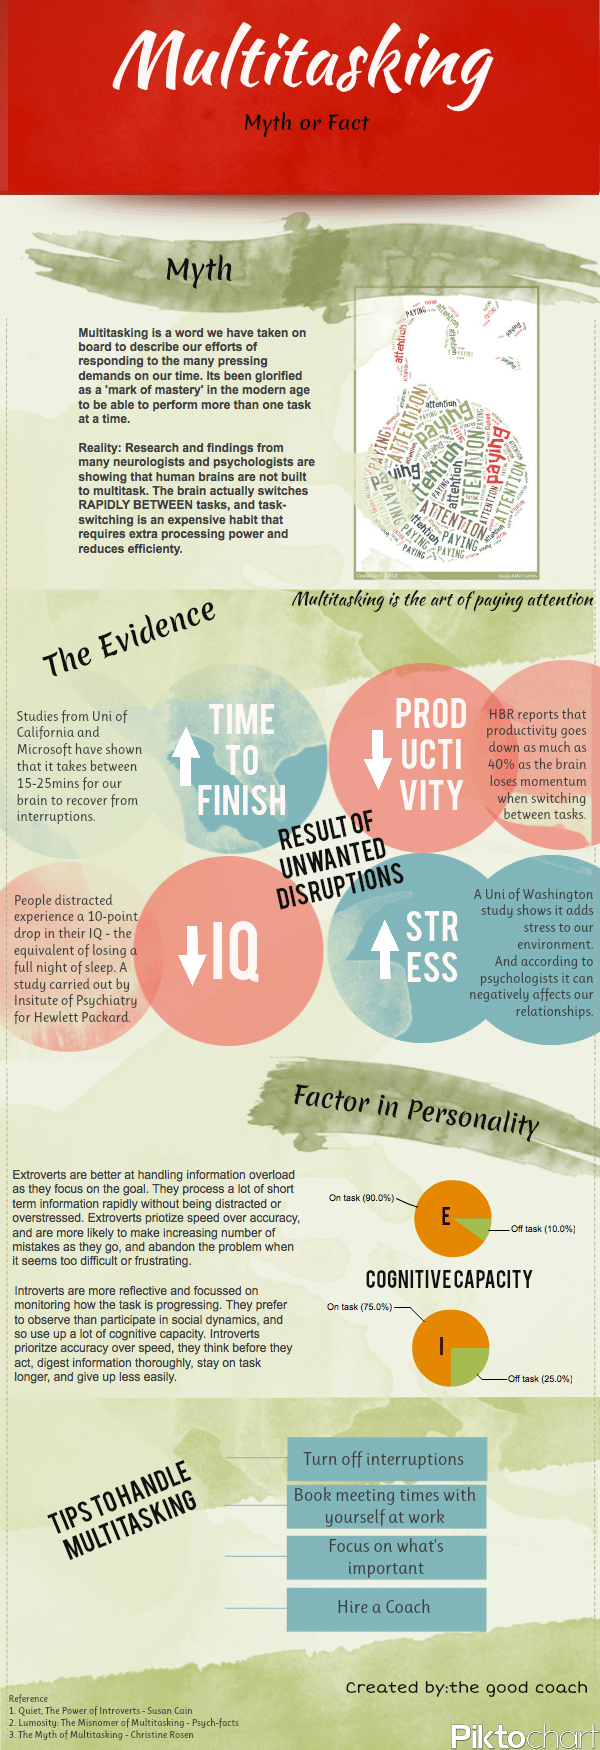 multitasking-myth-or-fact-infographic